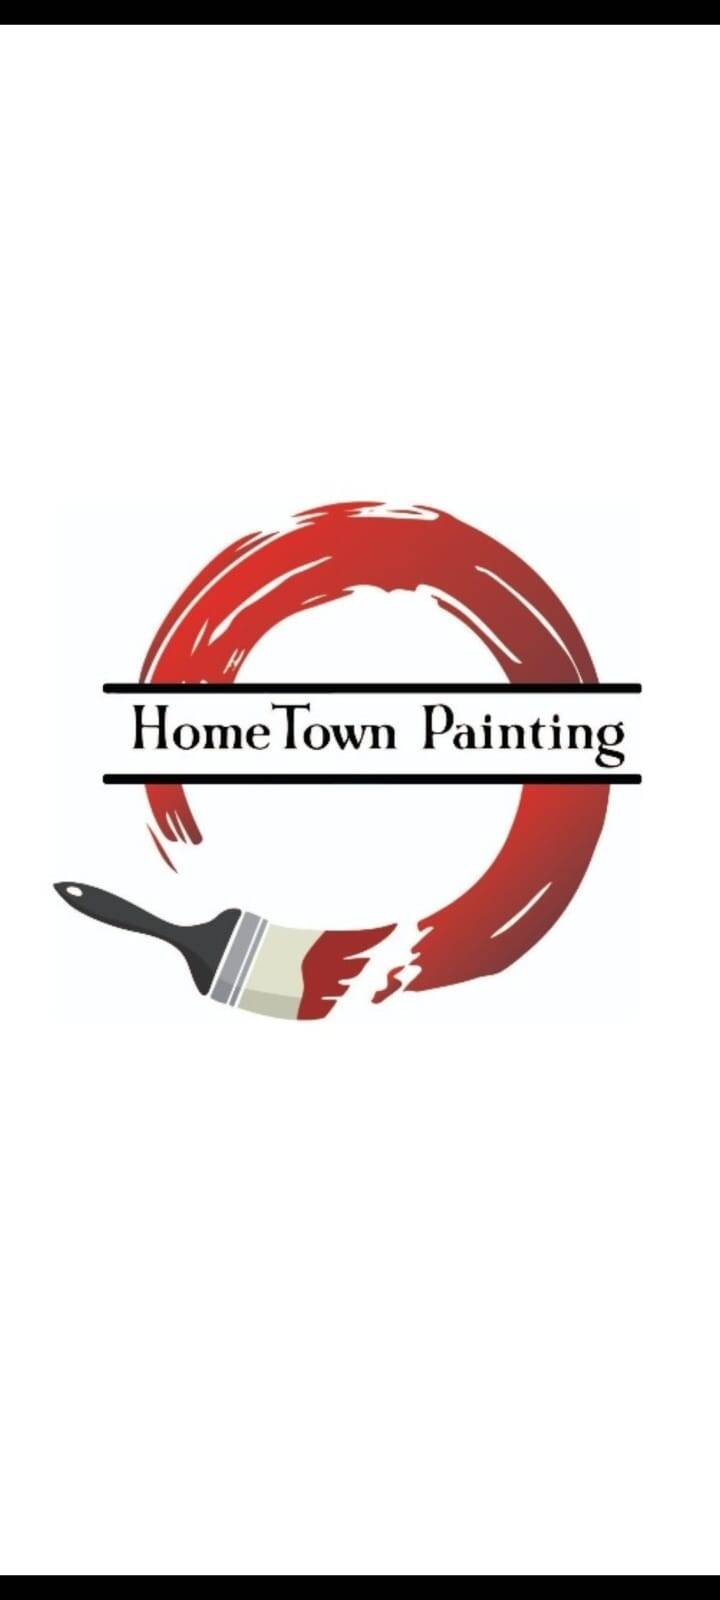 HomeTown Painting